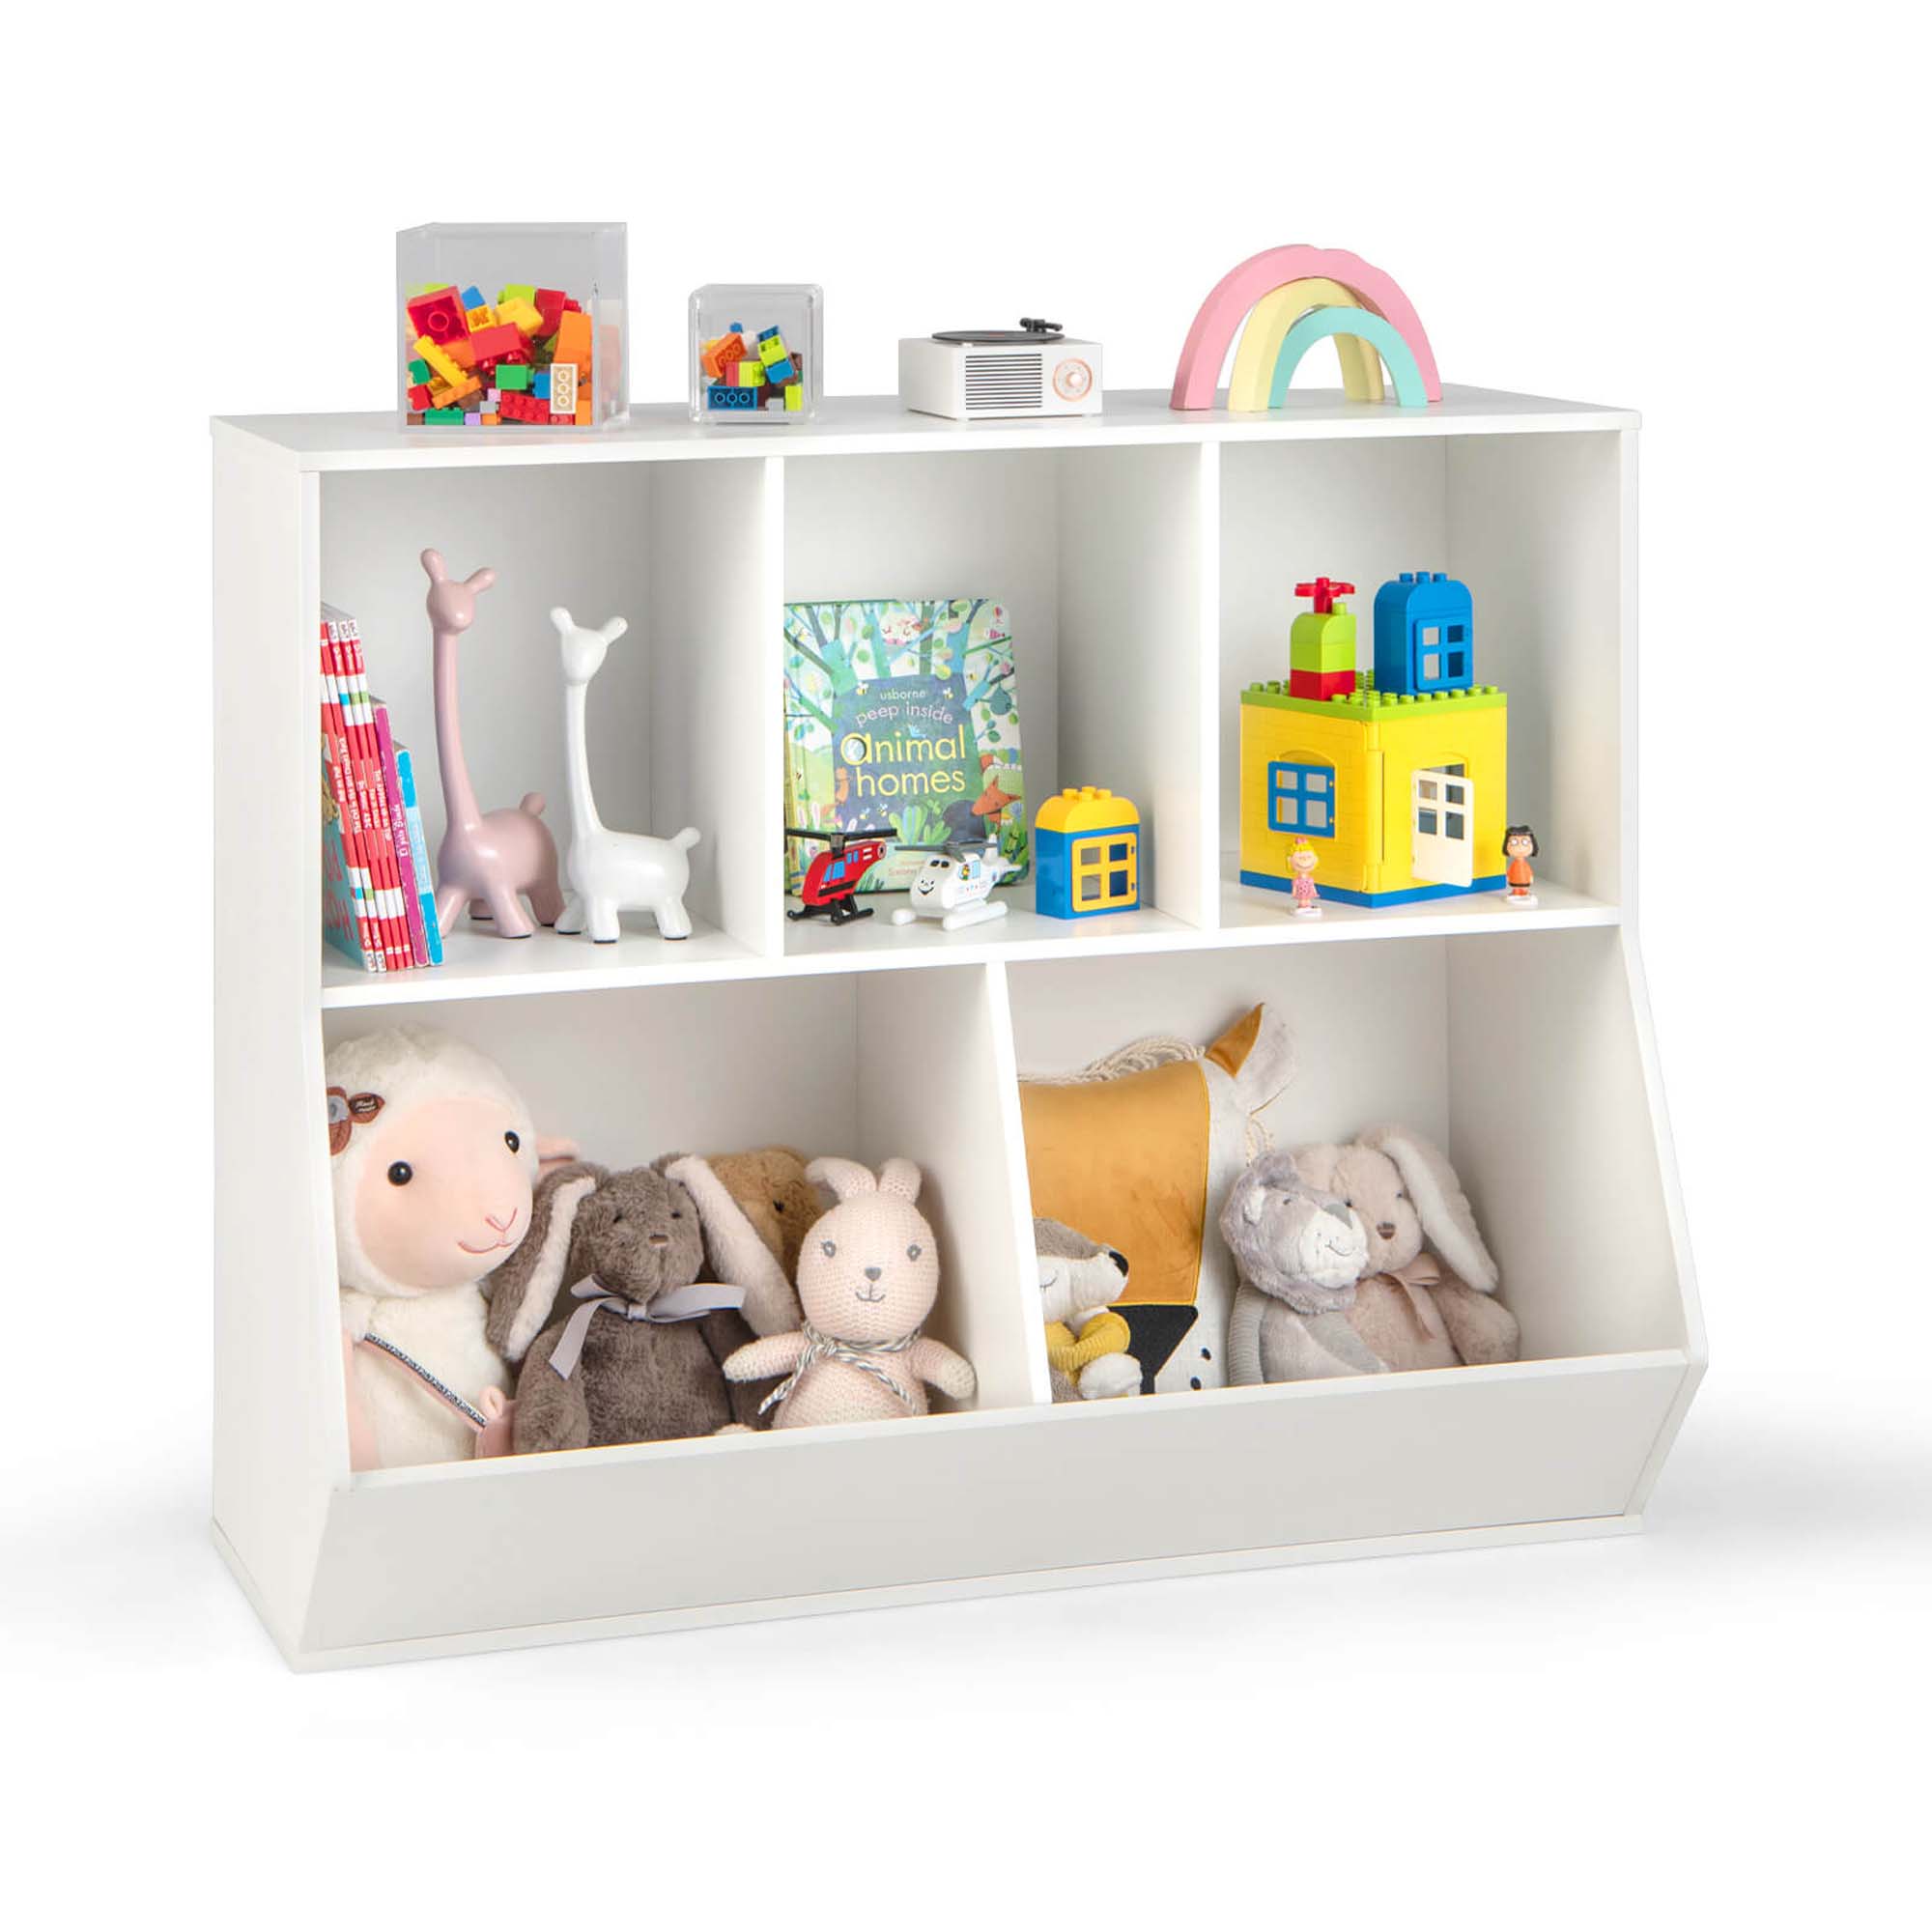 Costway 5-Cubby Kids Toy Storage Organizer Wooden Bookshelf Display Cabinet White - image 1 of 10